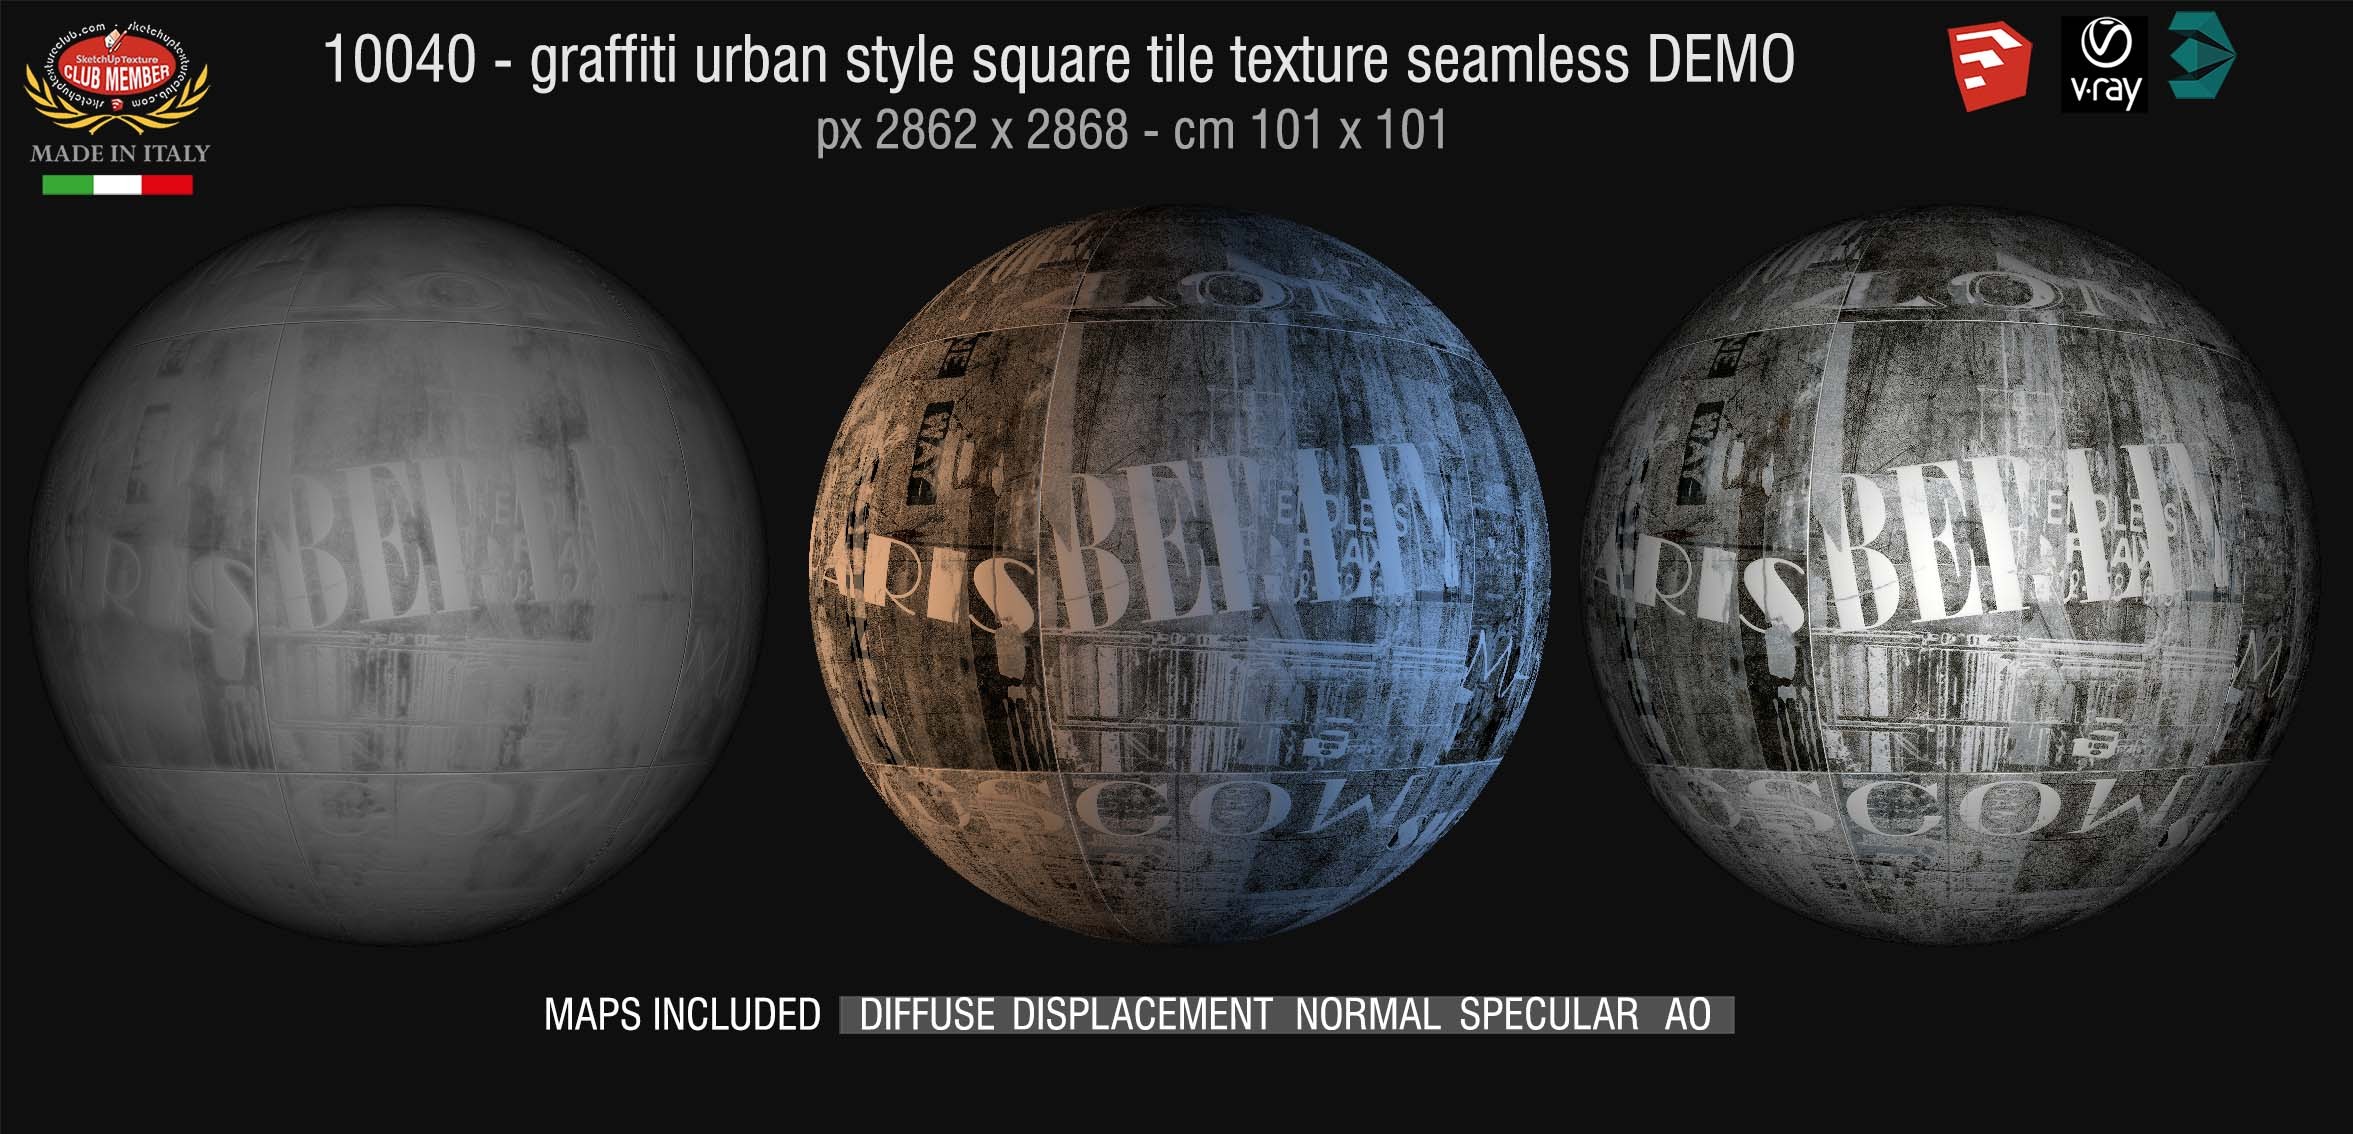 14040 HR Graffiti urban style square tile texture seamless + maps DEMO